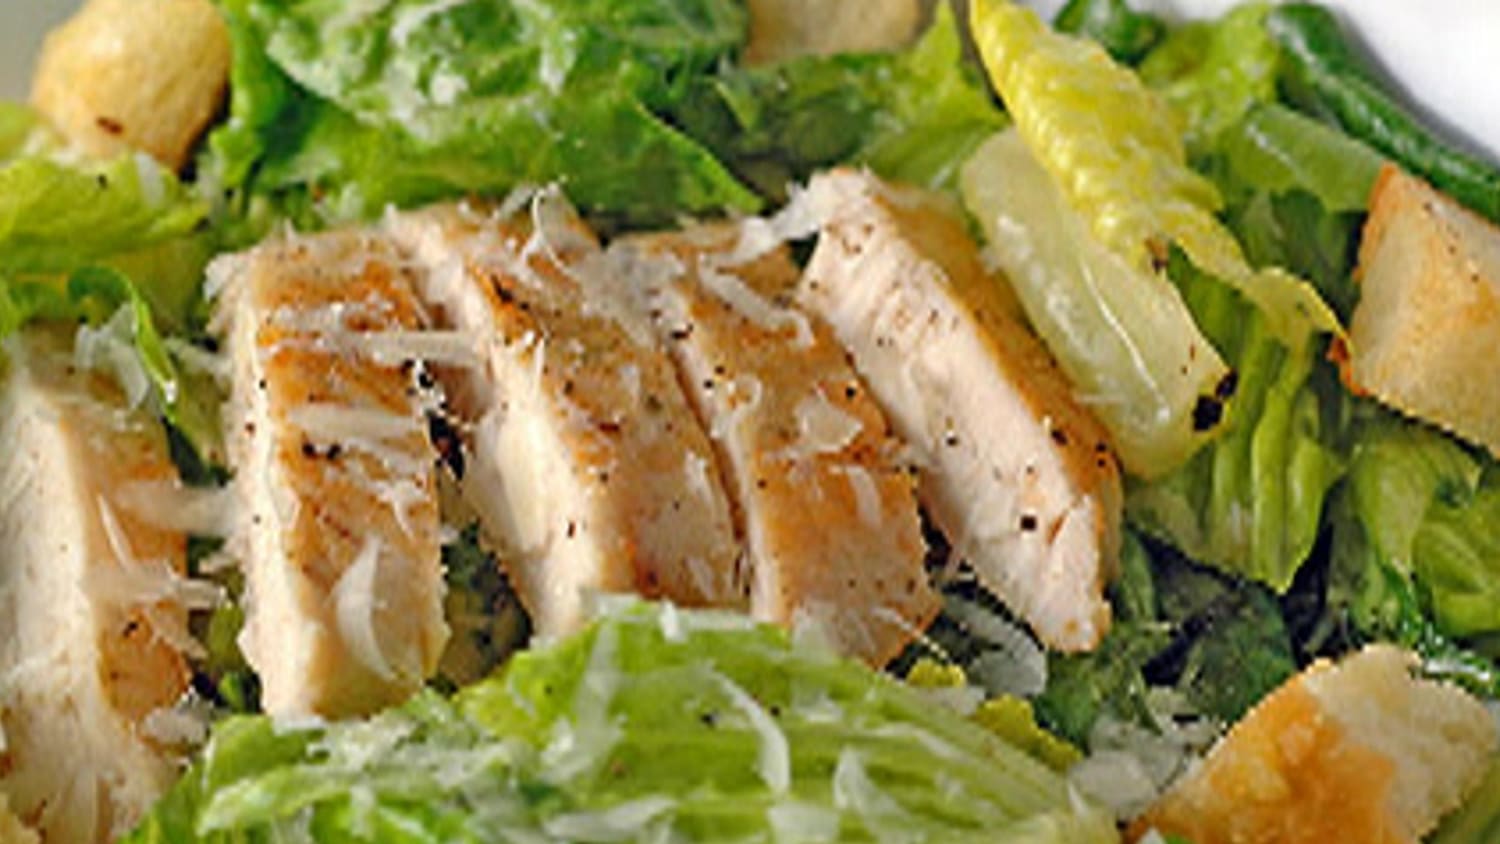 Sam's Club Chicken Caesar Salad Kits Recalled for Listeria Risk